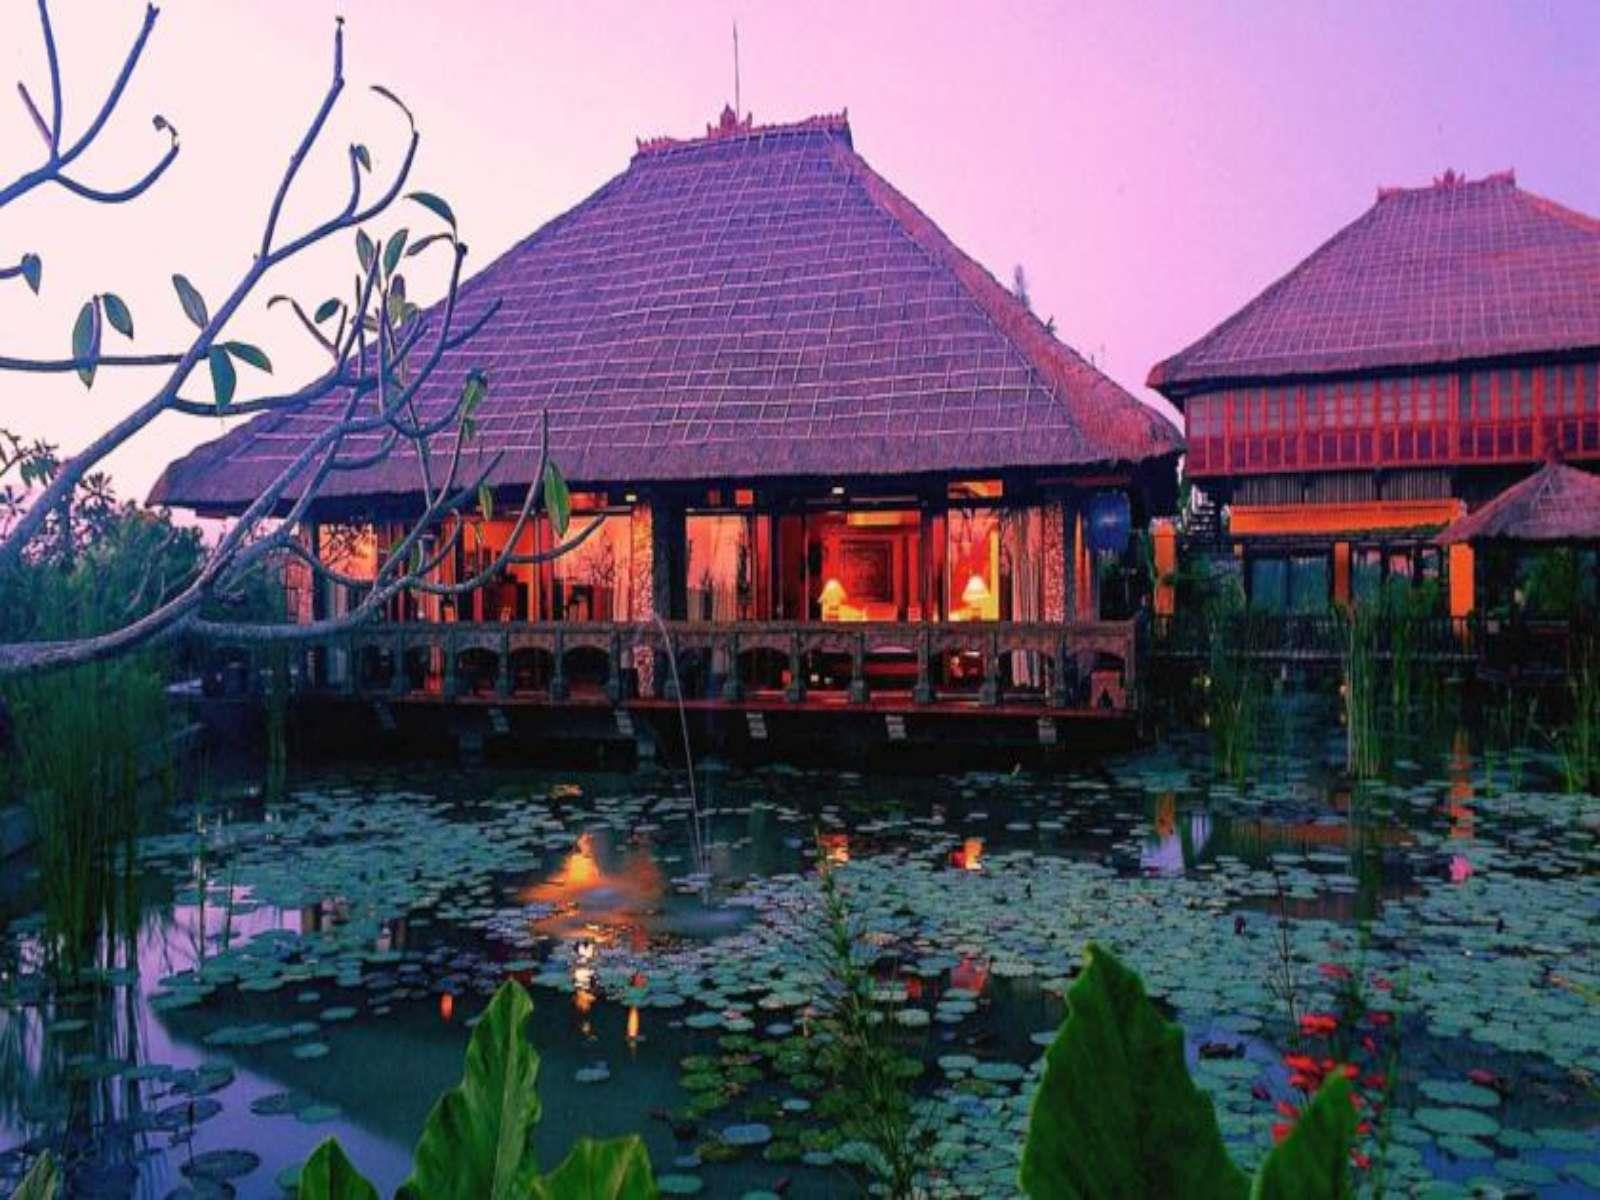 The Tugu Bali Hotel intro 2017